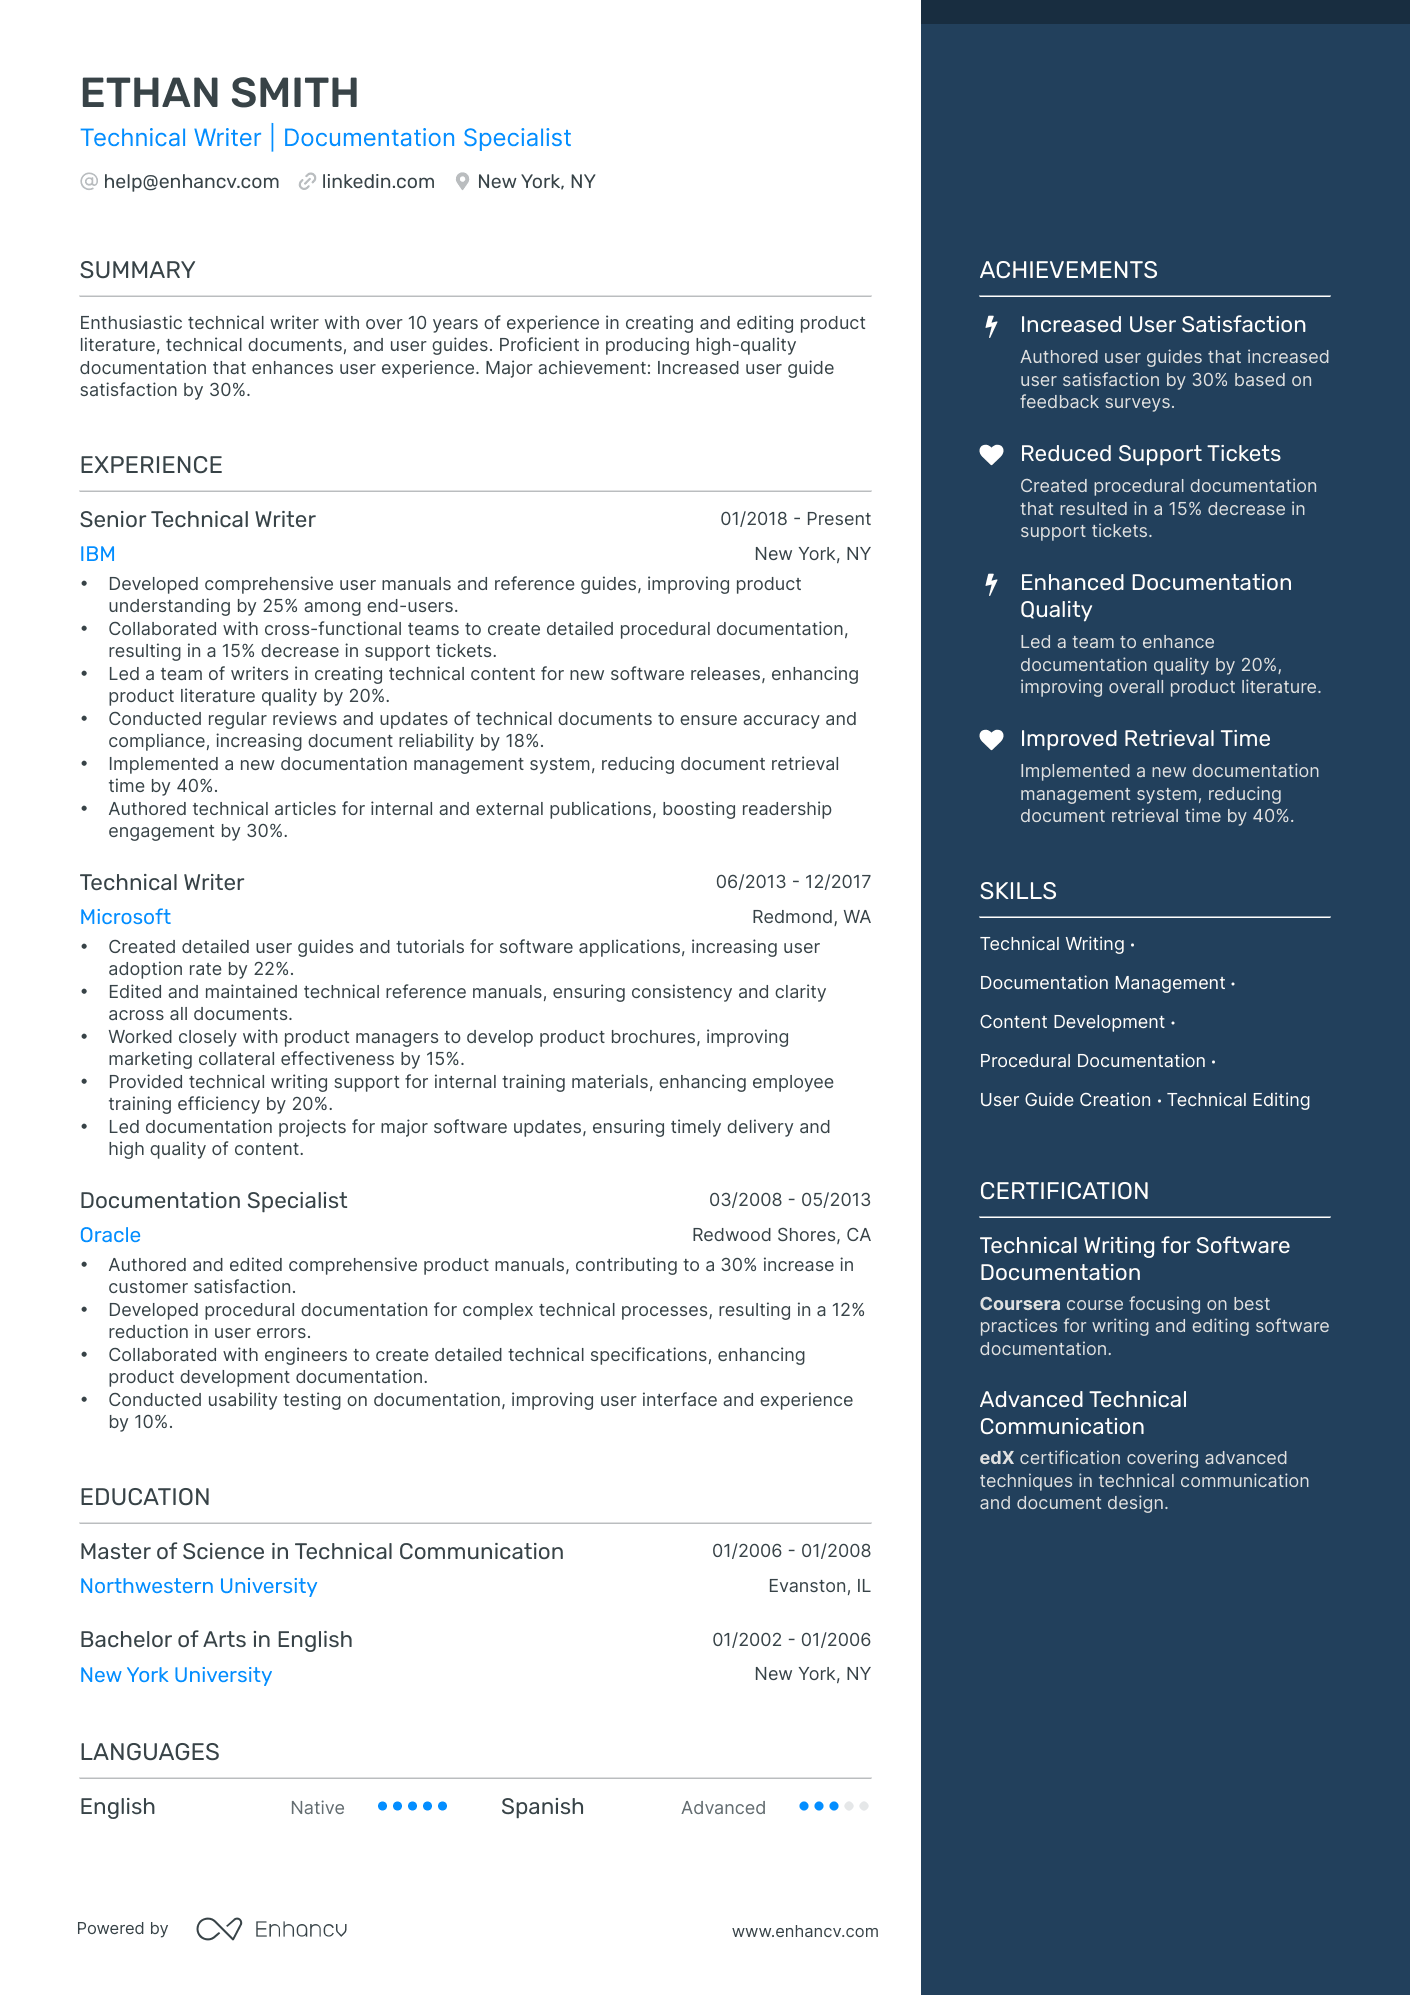 Technical Writer resume example